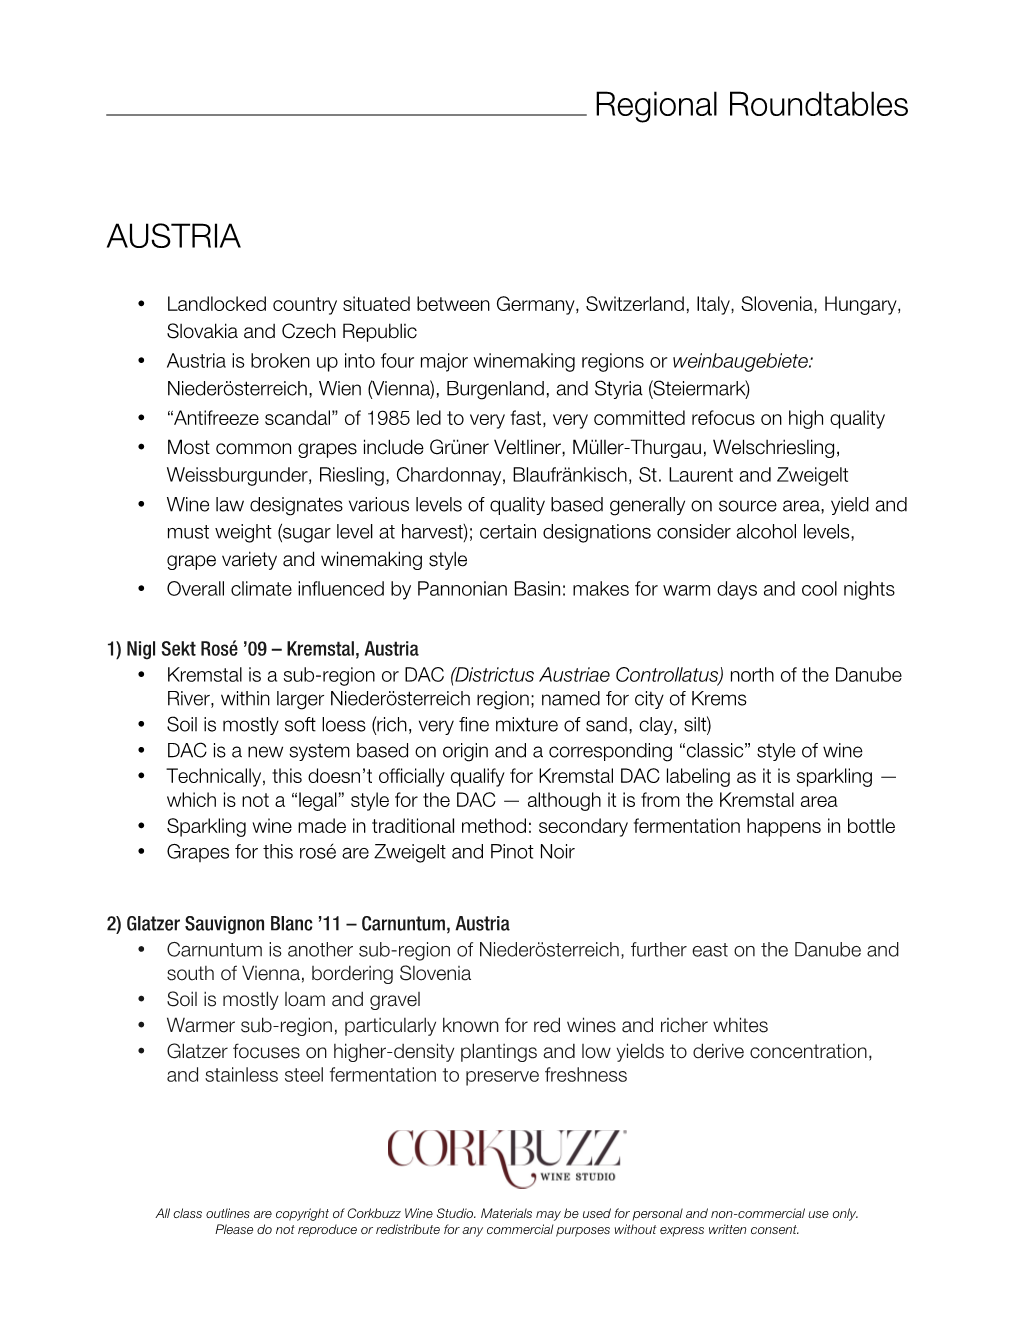 Regional Roundtables AUSTRIA